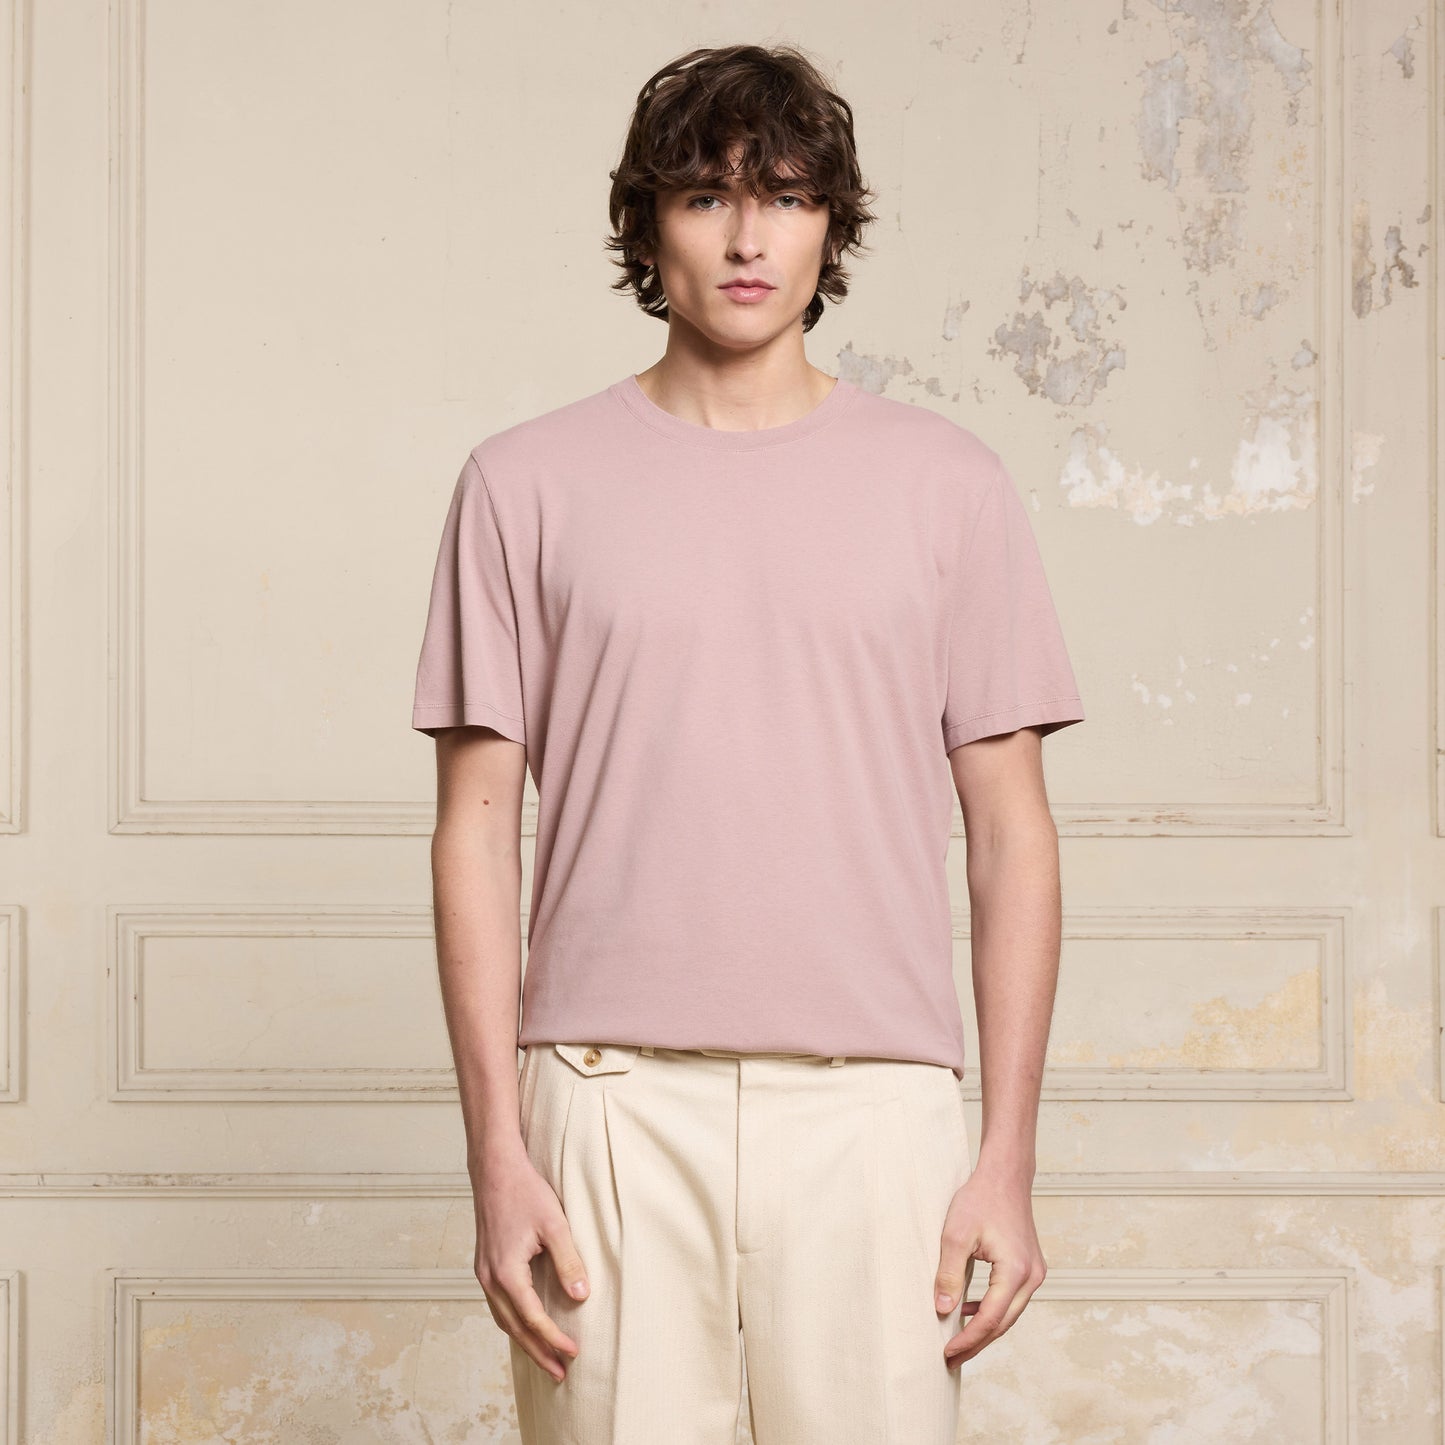 Pale pink t-shirt